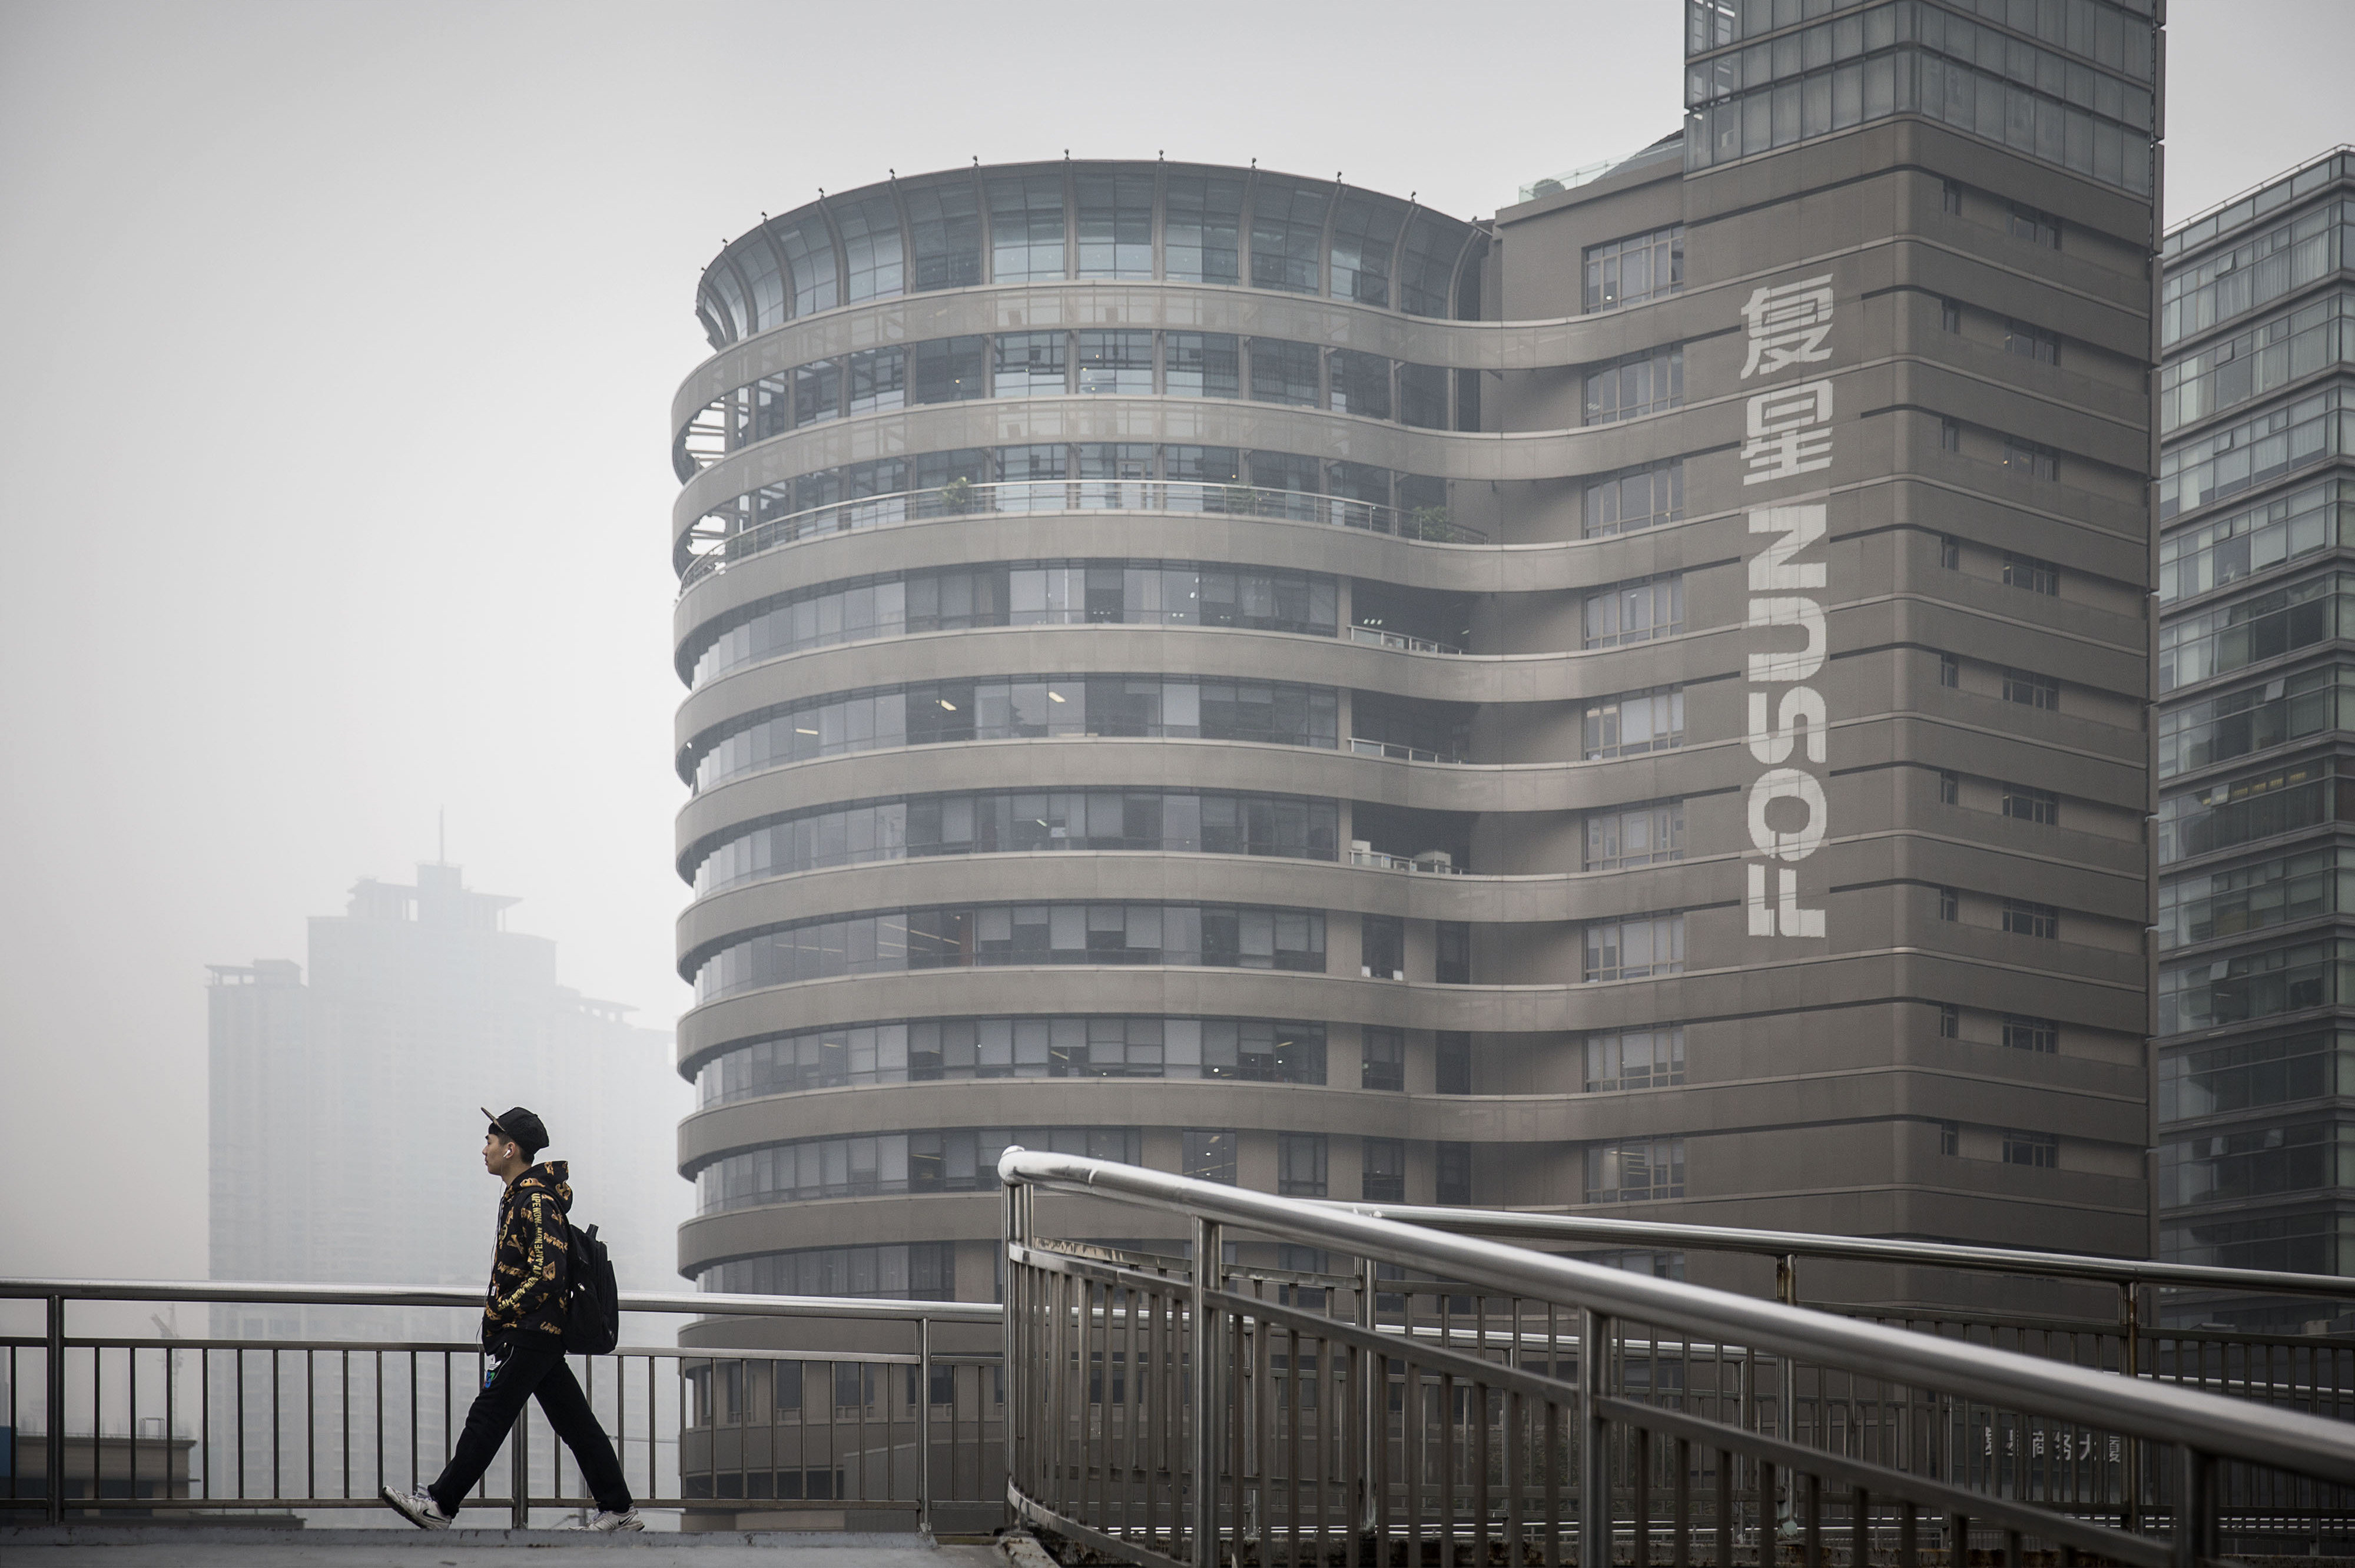 Fosun International Limited’s headquarters in Shanghai on December 11, 2015. Photo: Bloomberg